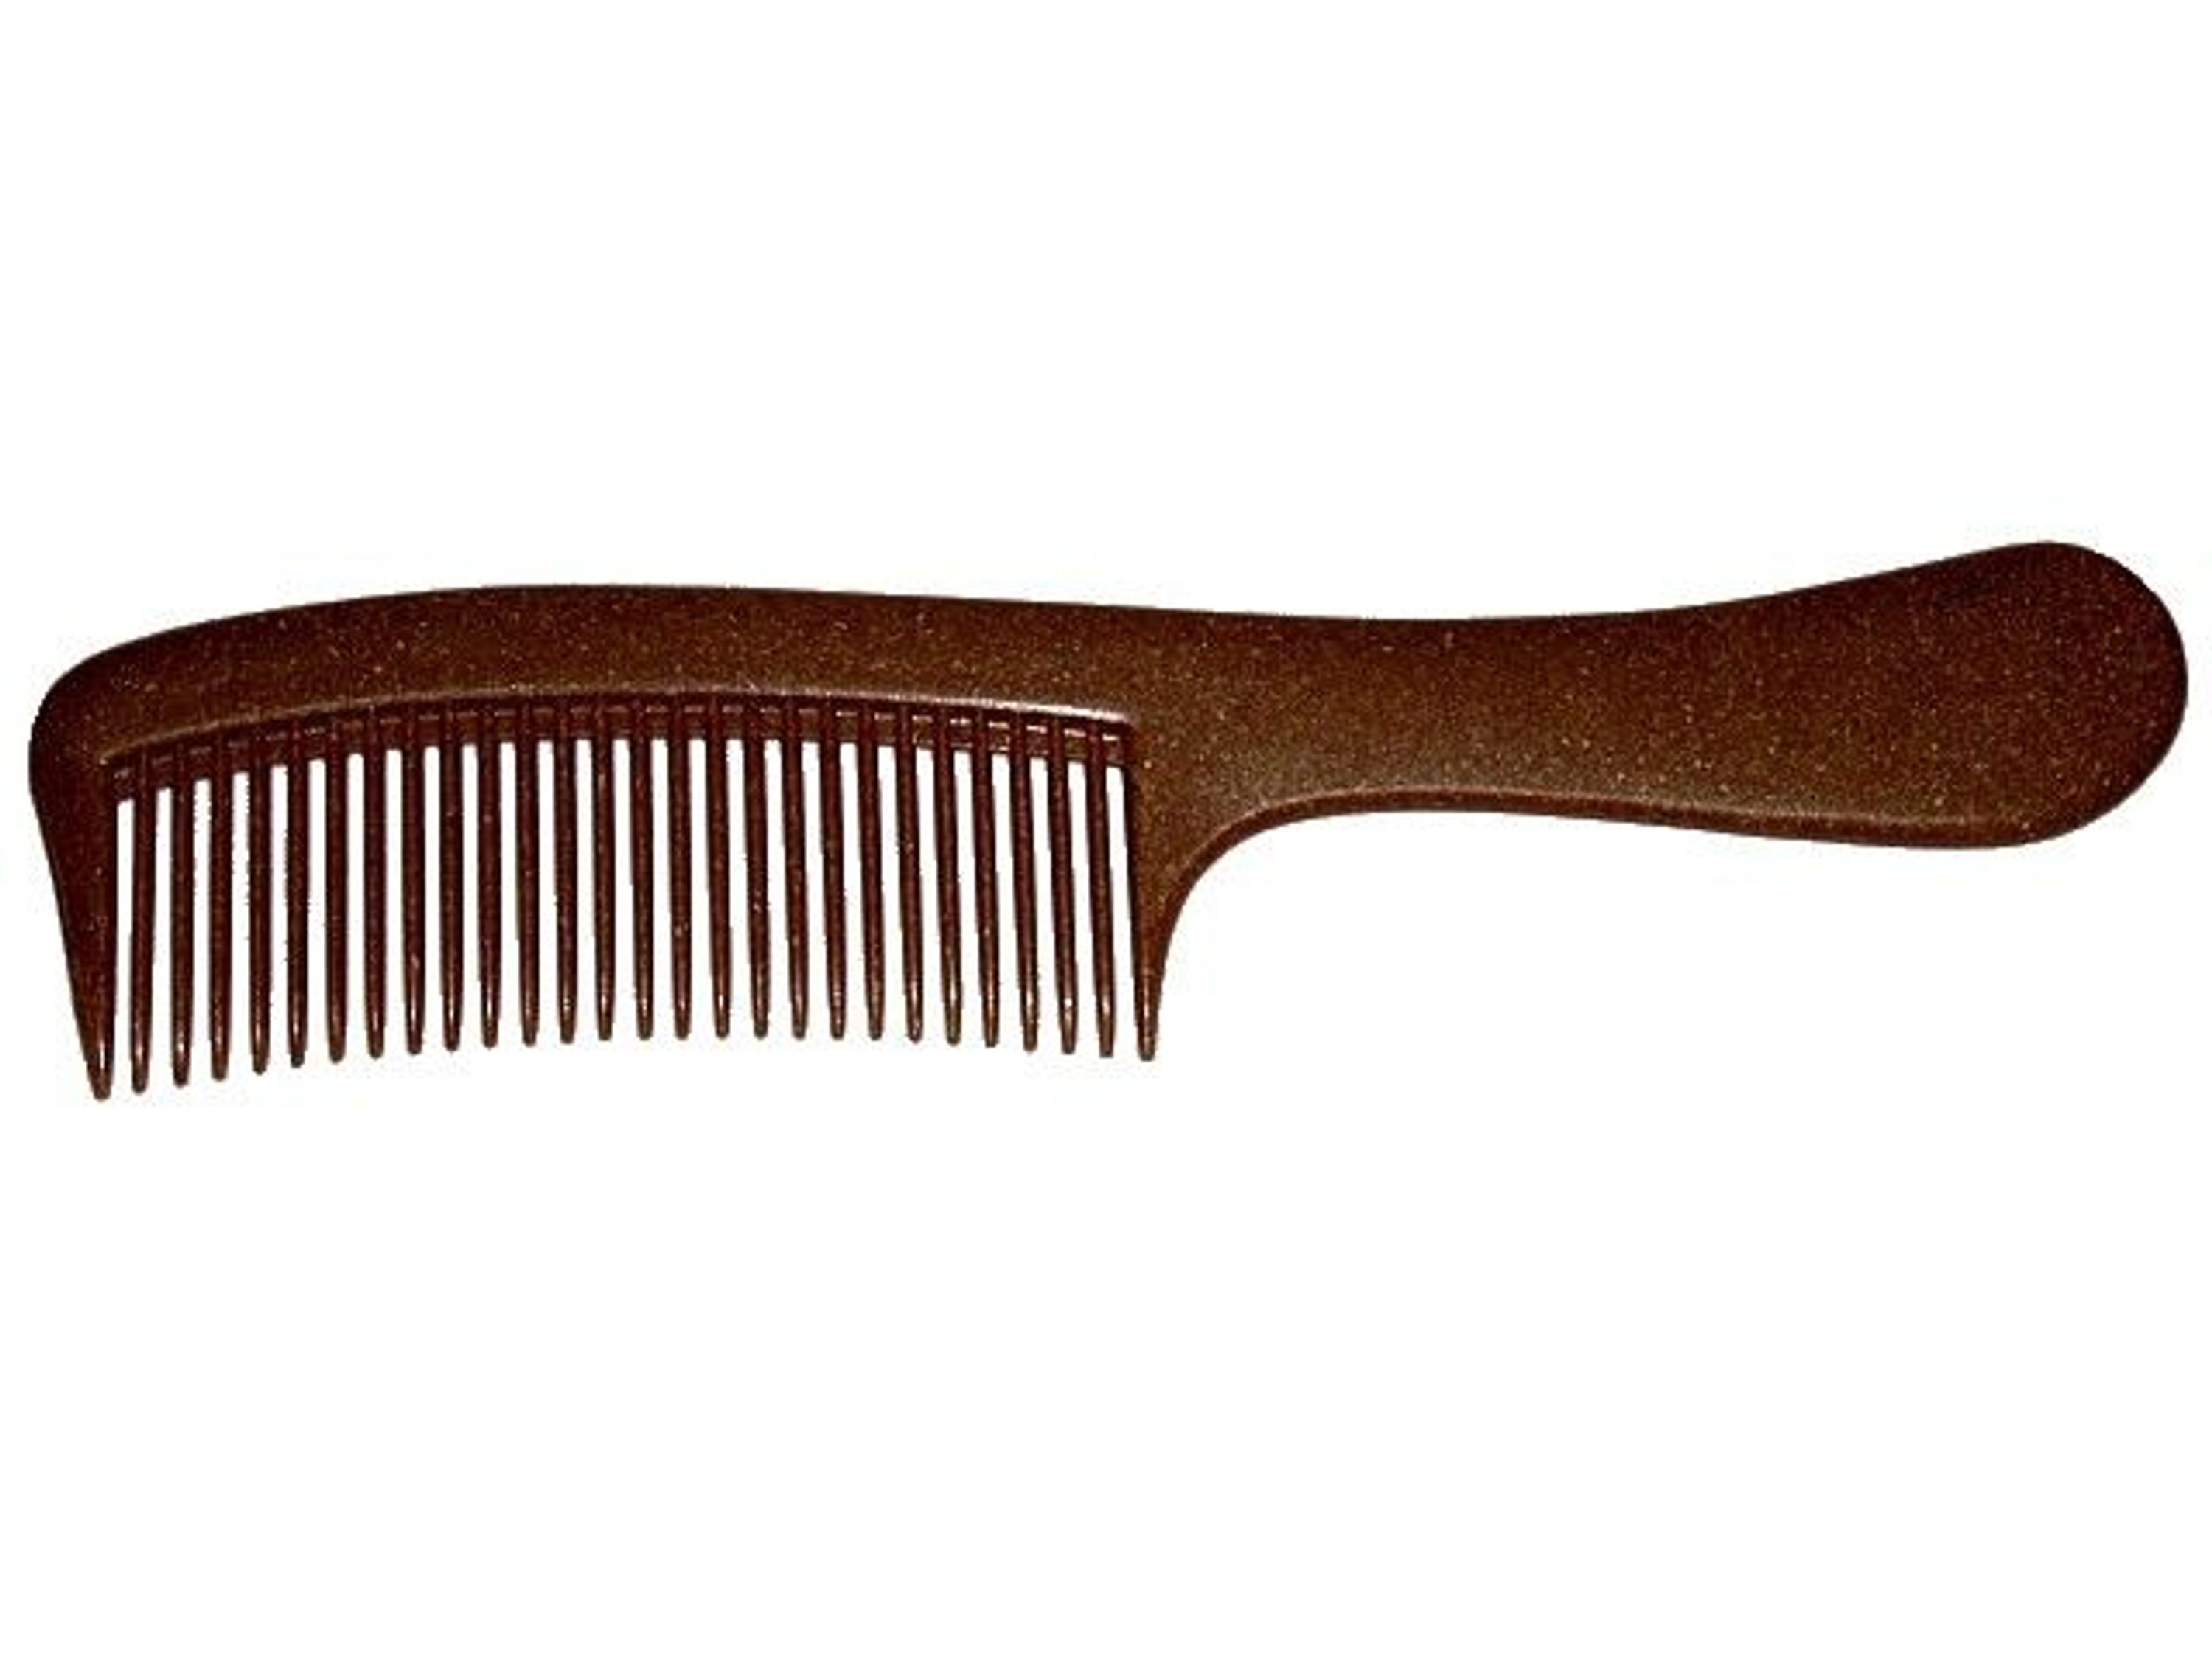 Liquid wood comb with handle